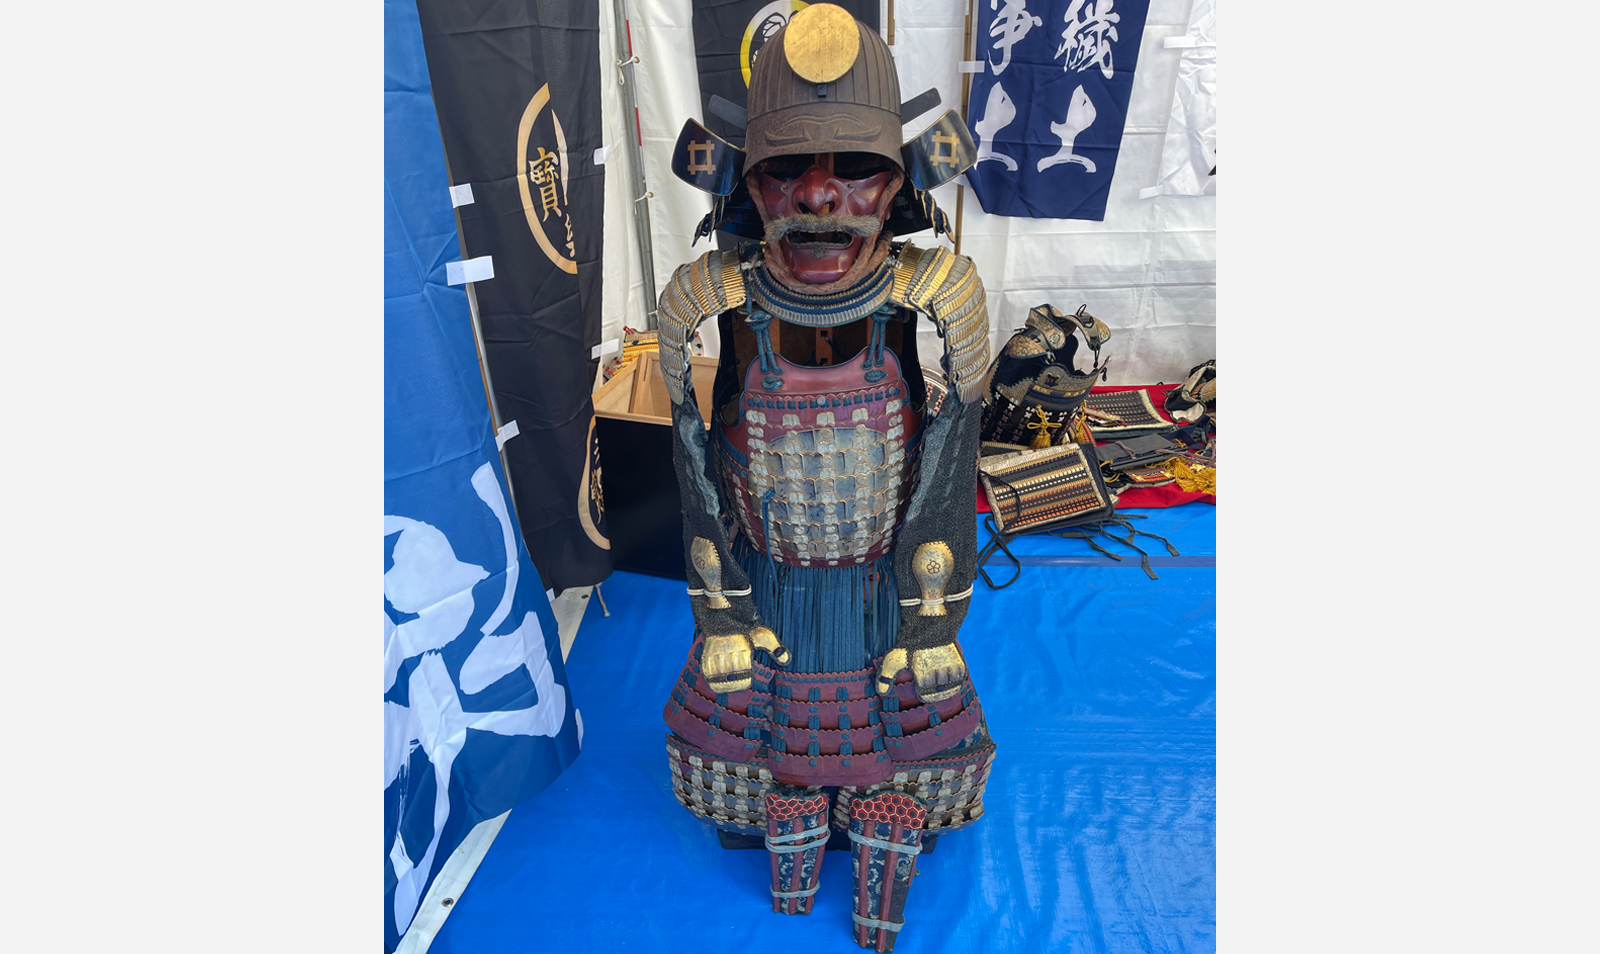 samurai-themed event